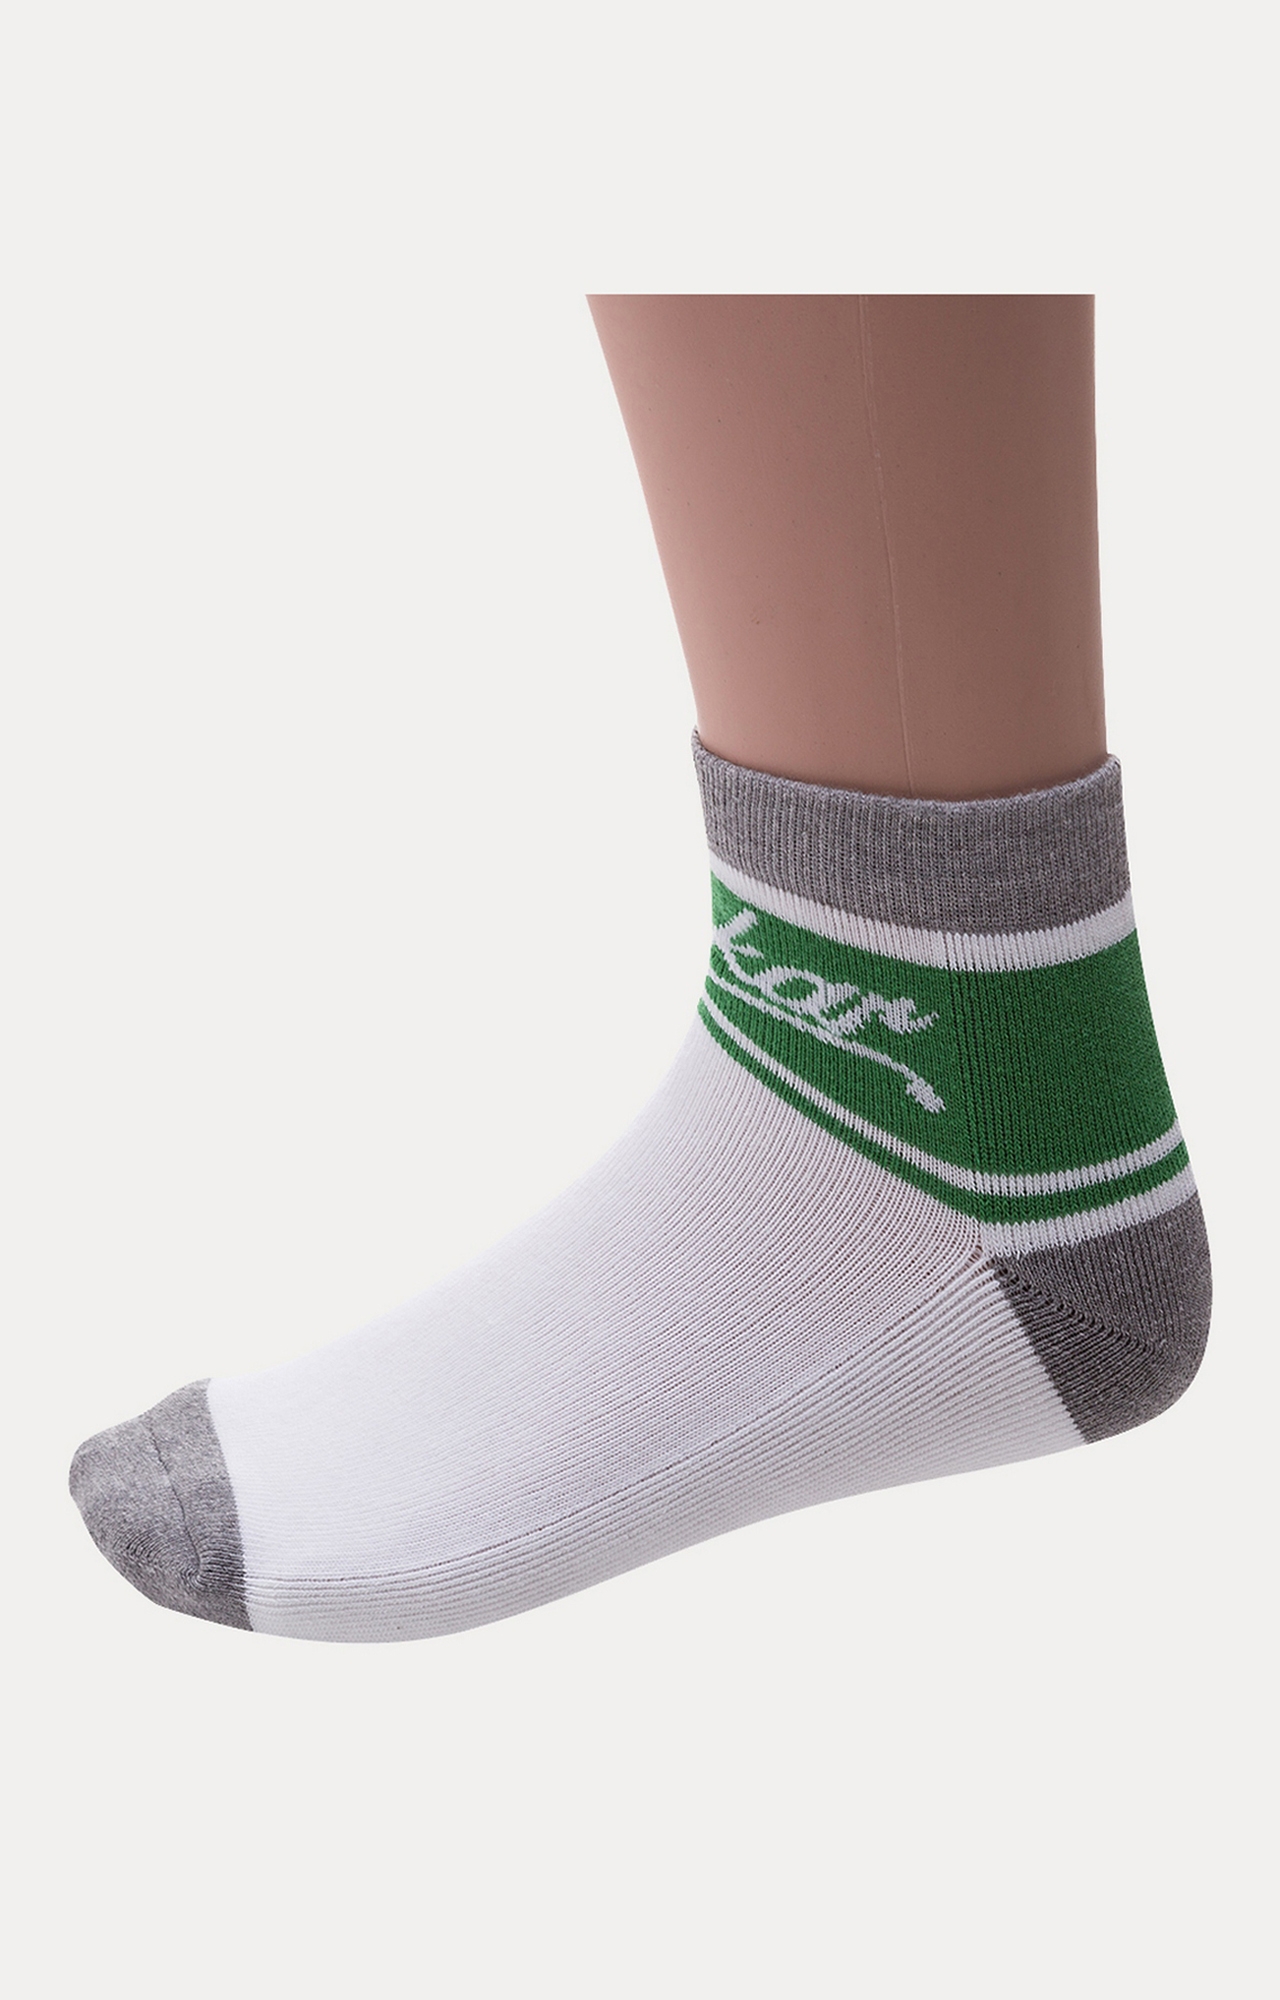 spykar | Spykar White & Grey Printed Ankle Length Socks - Pair Of 2 2